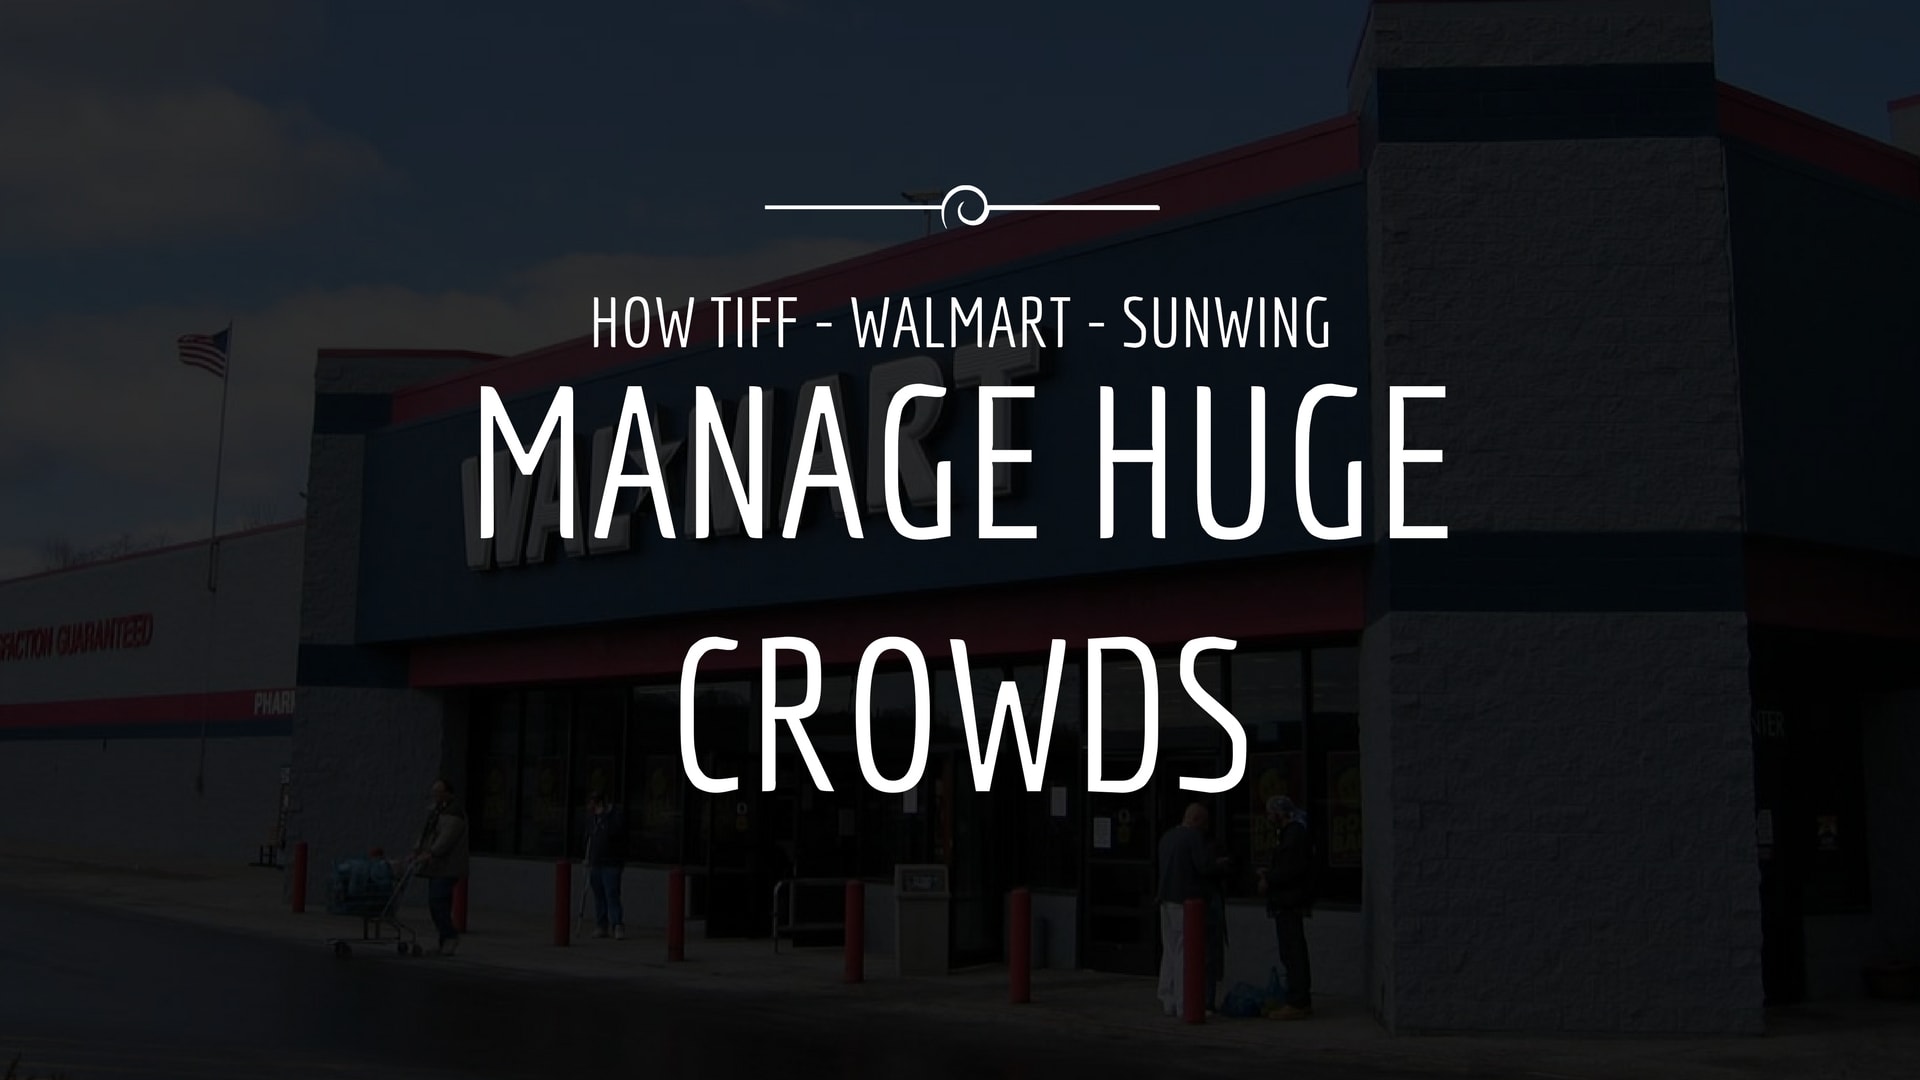 How TIFF, SunWing, and Walmart Manage Huge Crowds